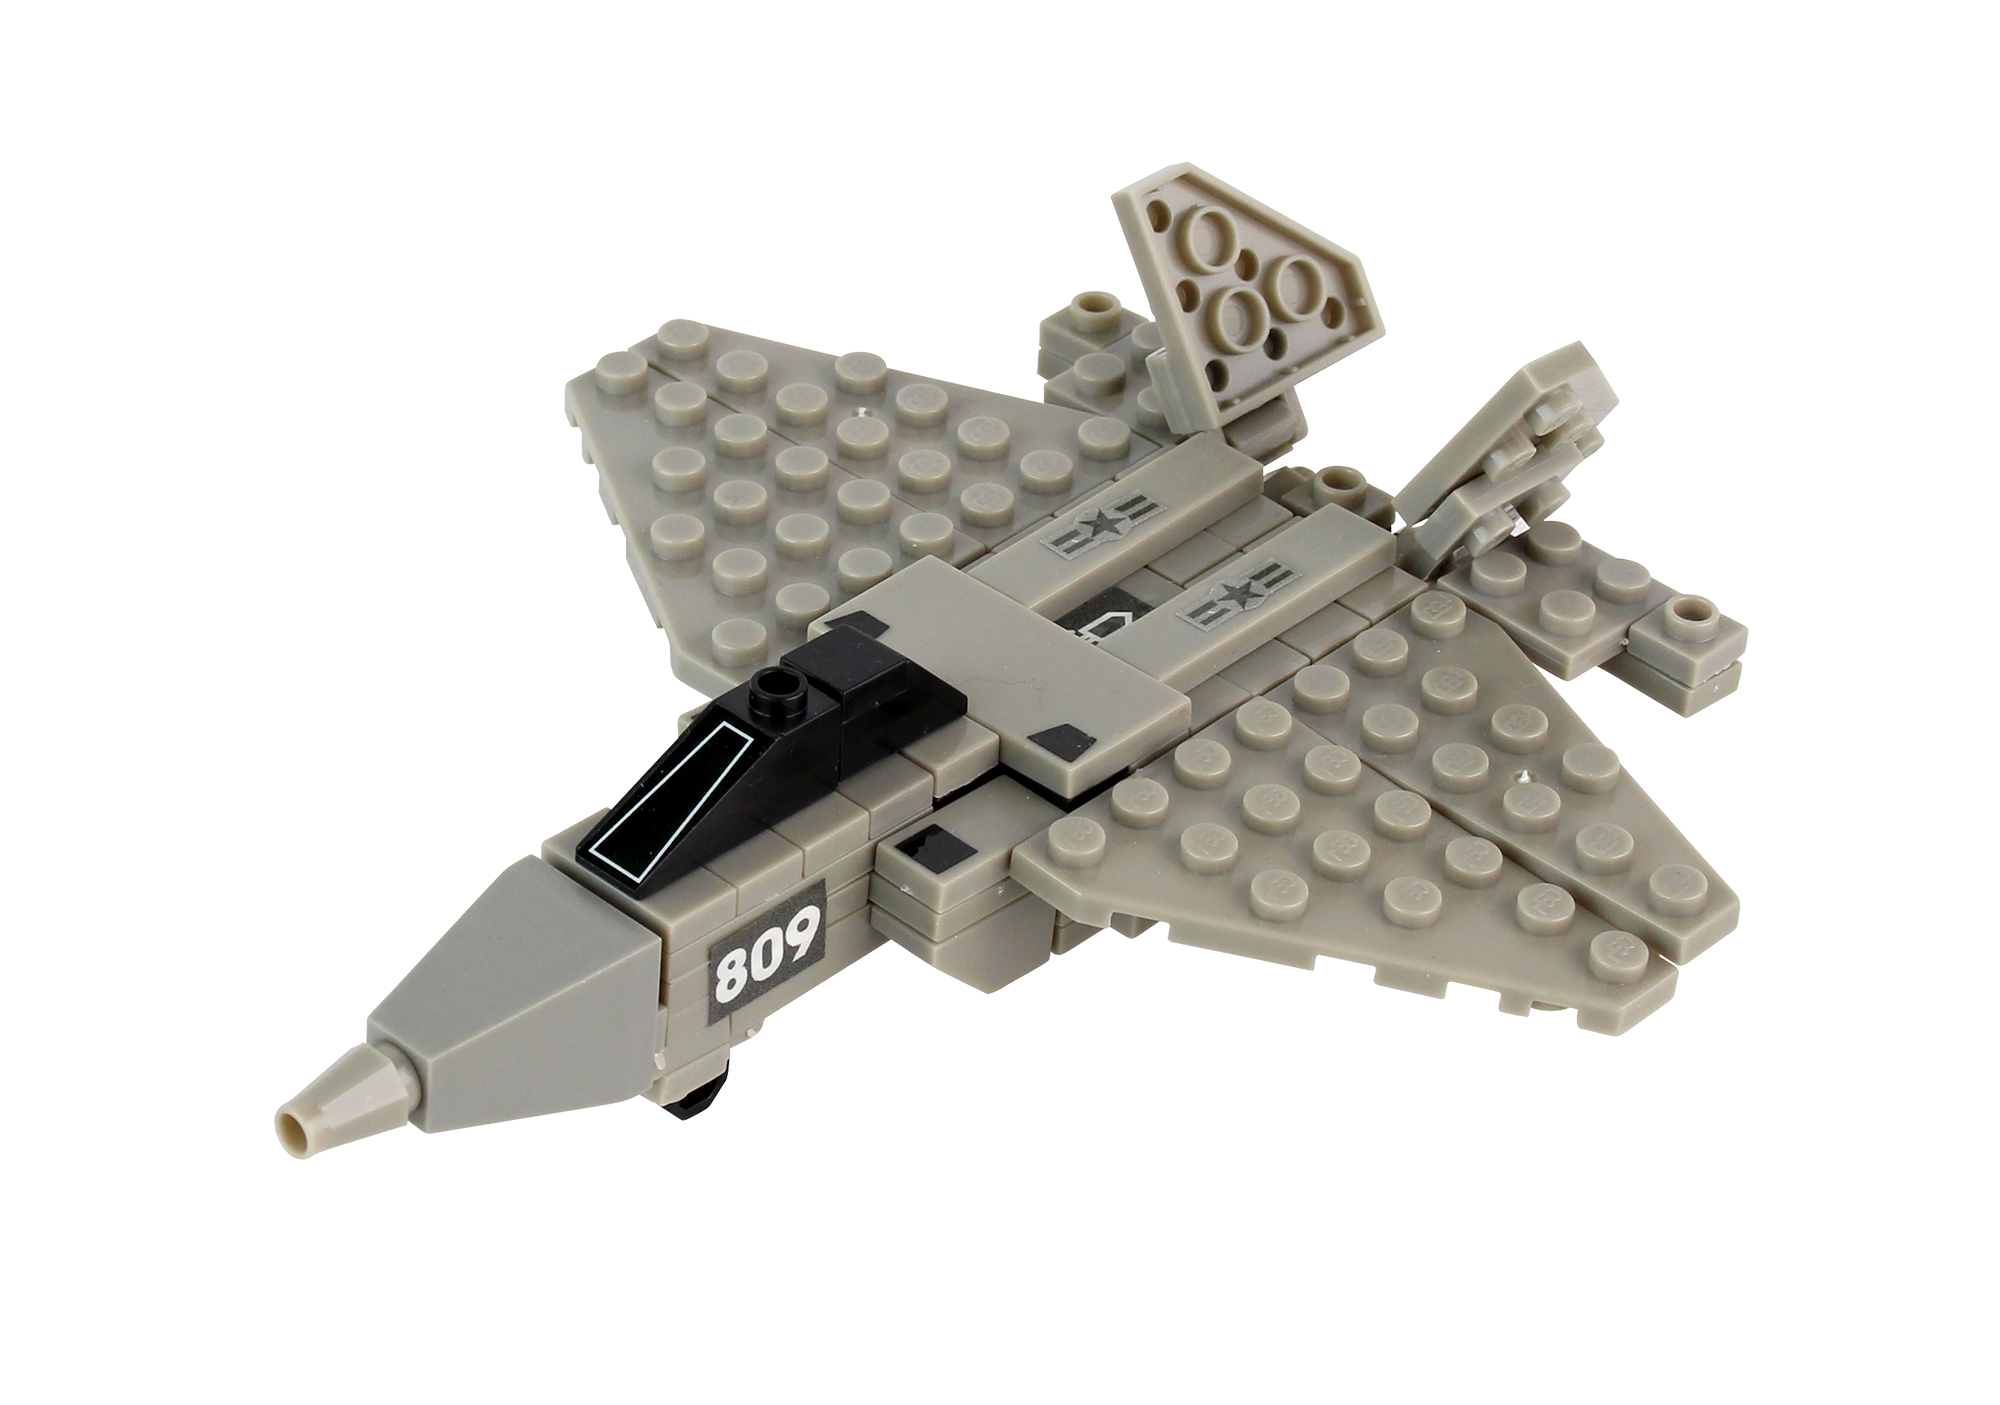 BL14187 - "f-22 Raptor 85 Piece Construction Toy"